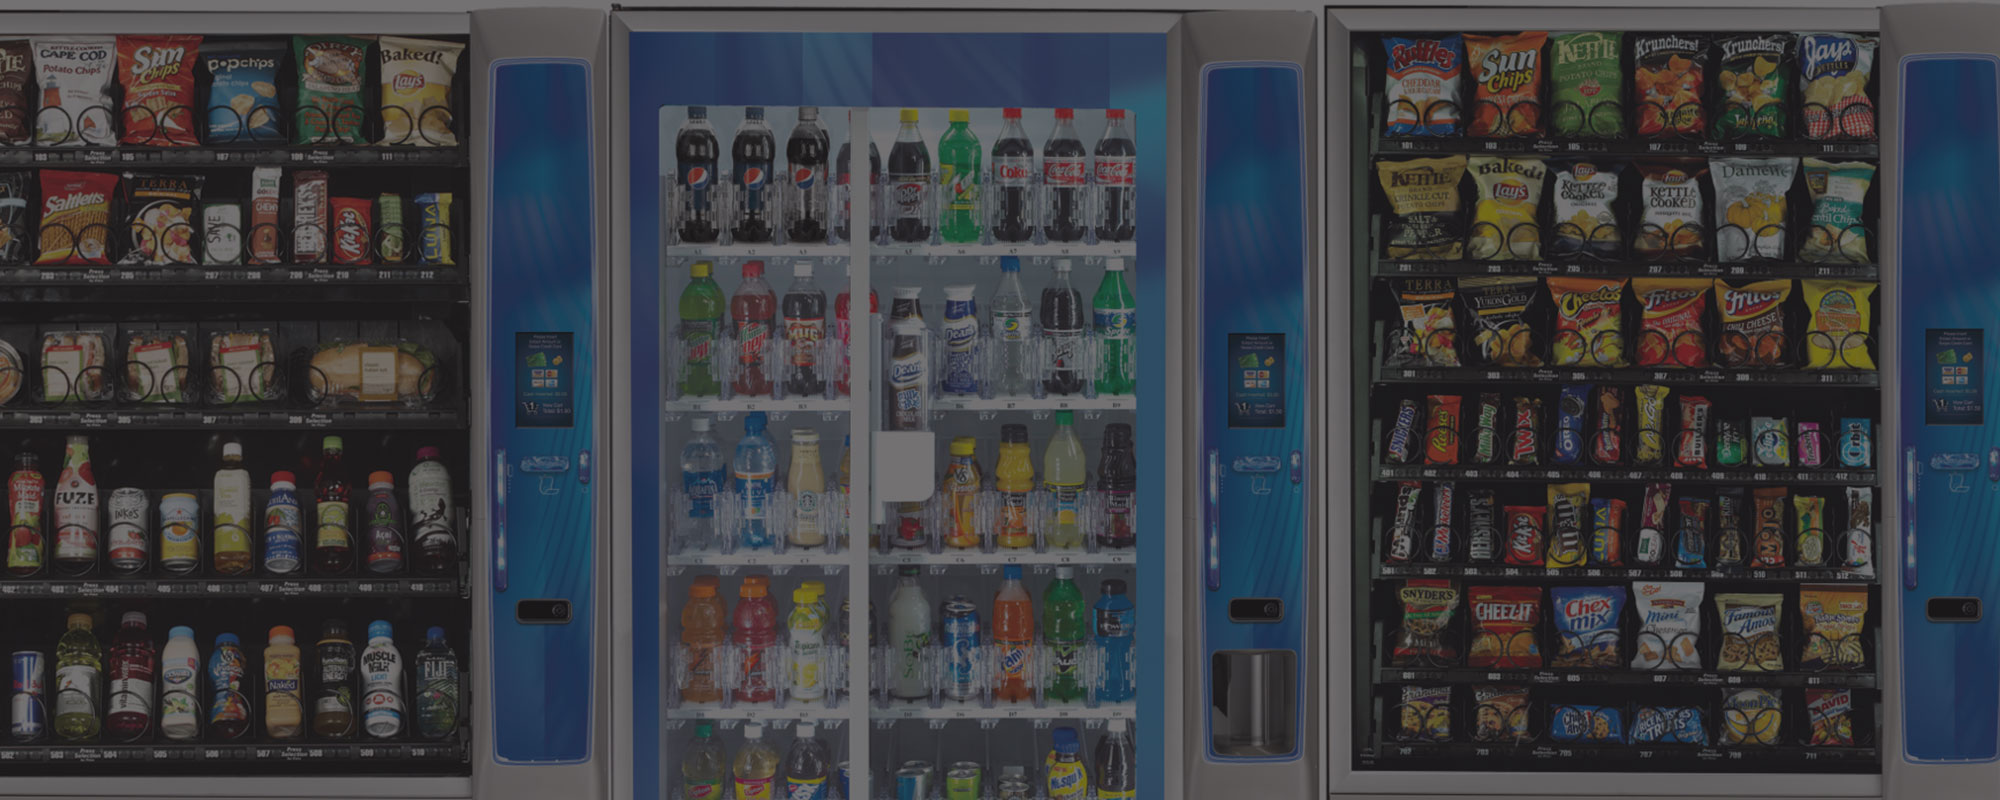 Vending machines in Washington DC and DMV area